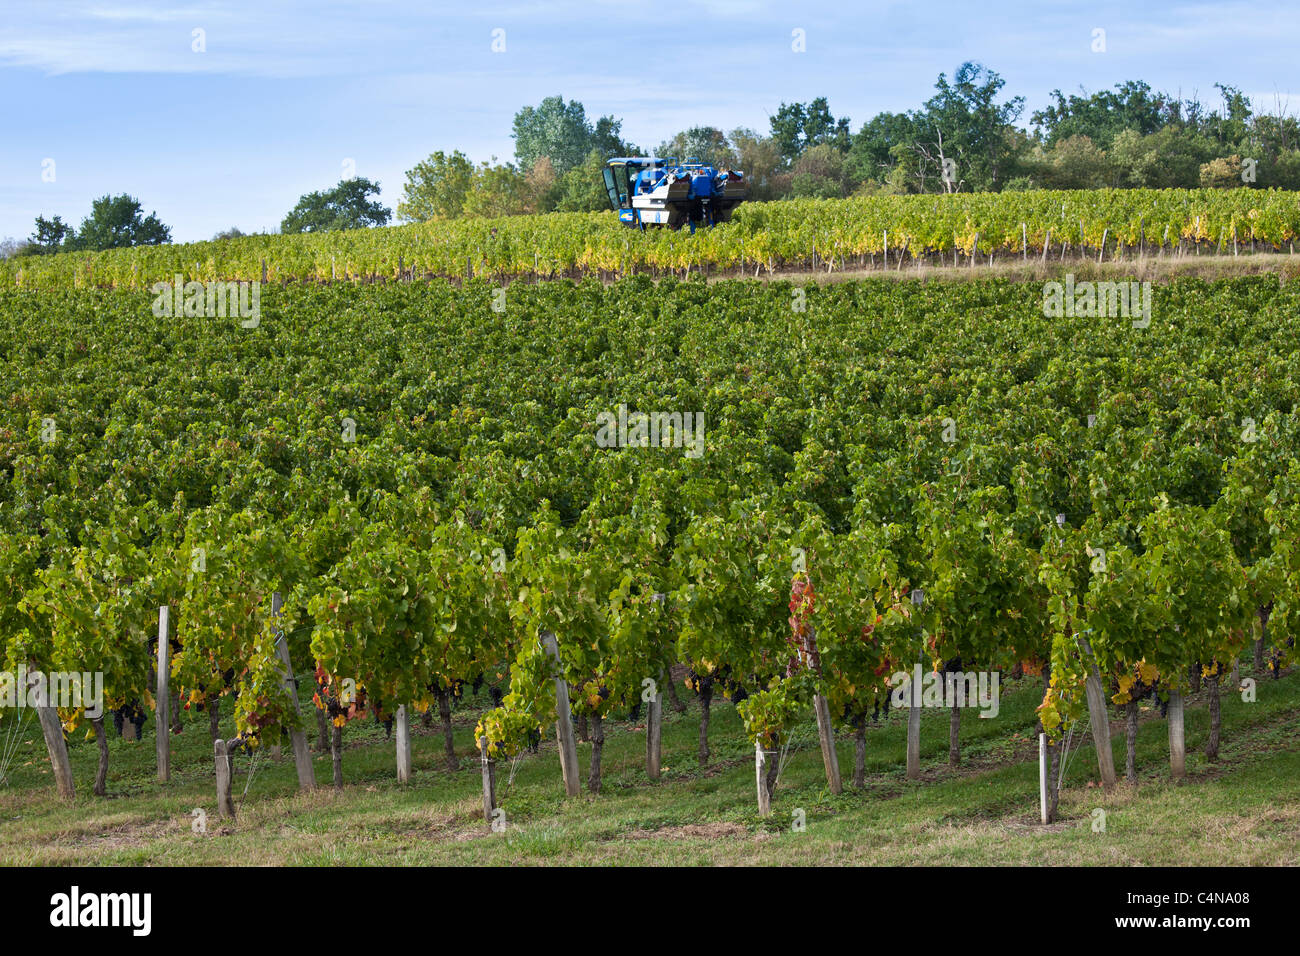 Vine tractor at work during vendange harvest in vineyard at St Emilion, Bordeaux wine region of France Stock Photo